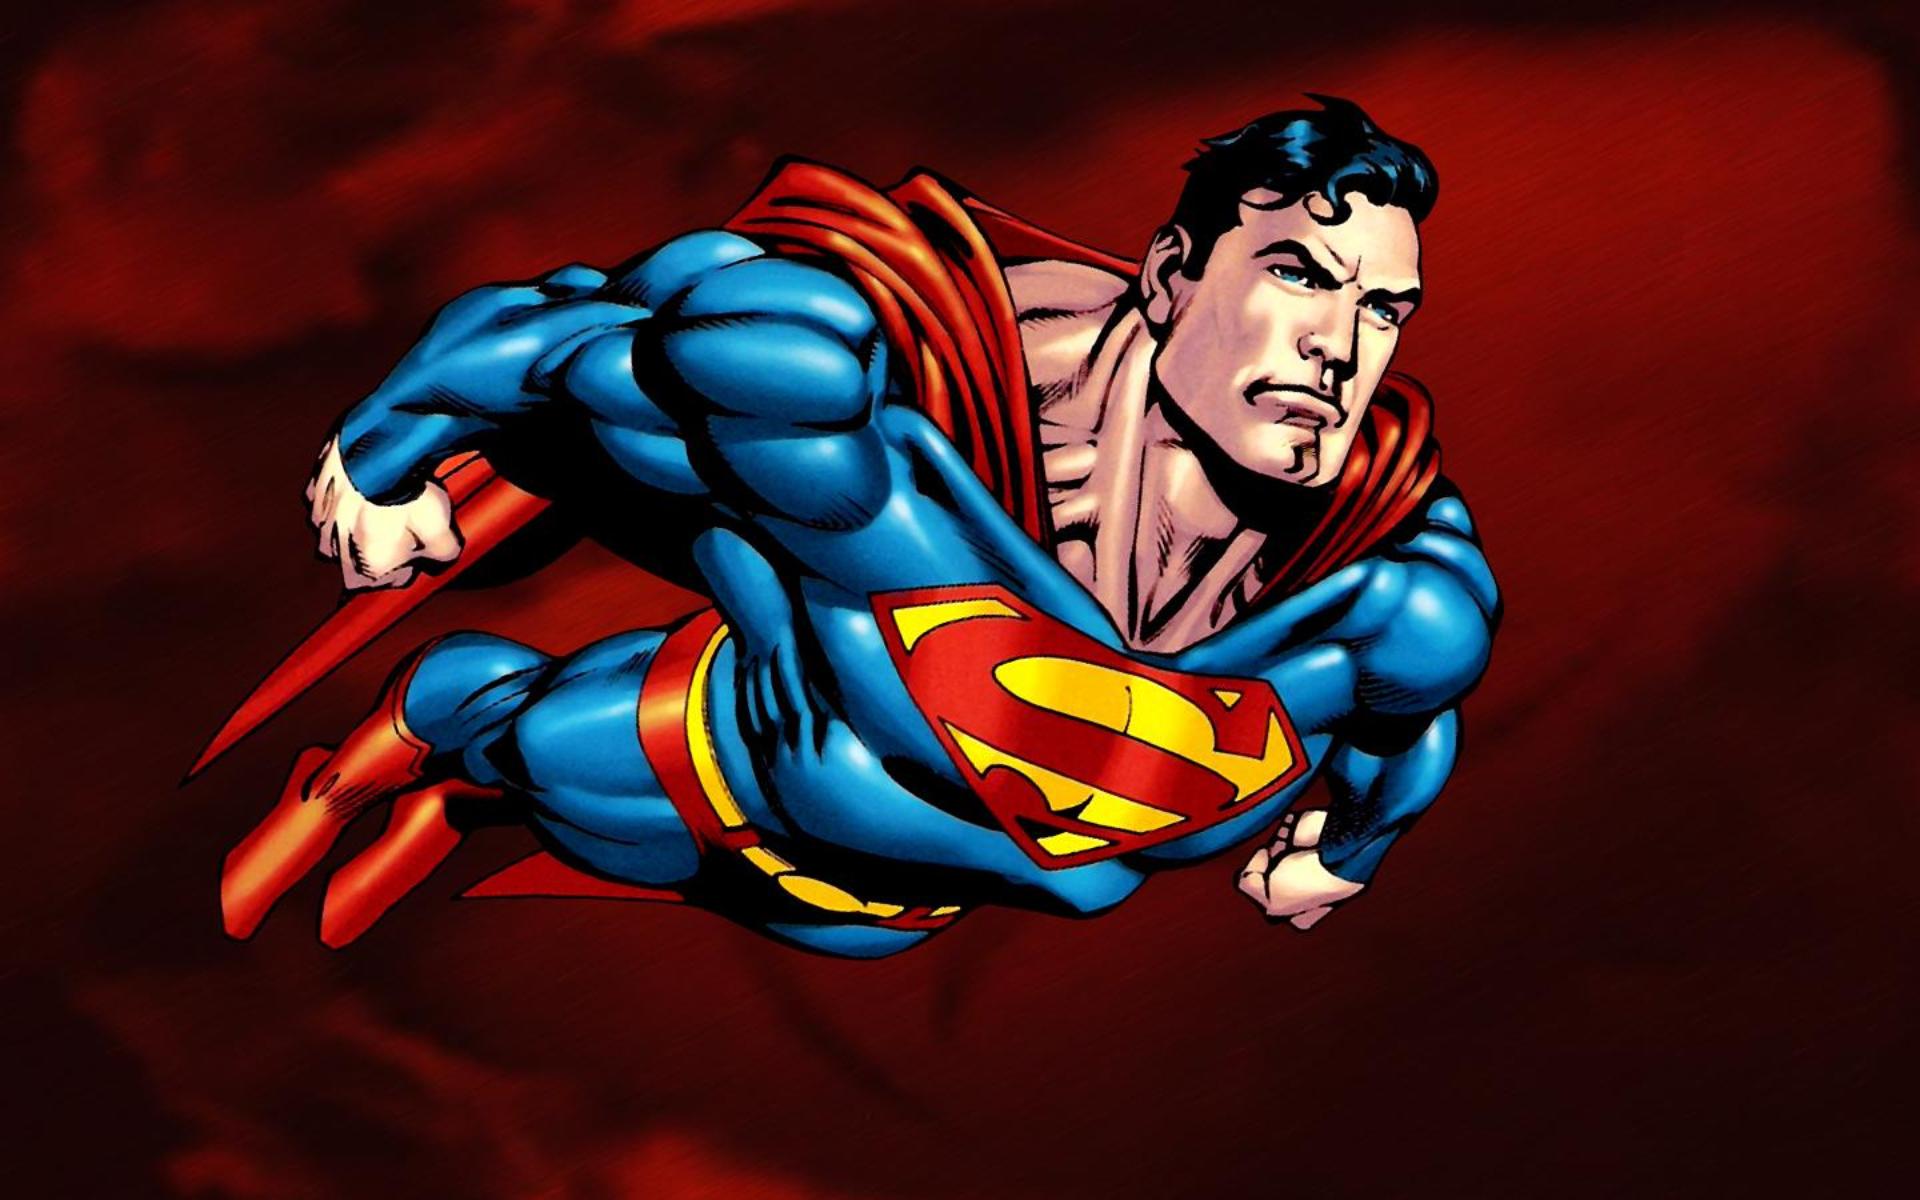 Superman Wallpaper Images Desktop For Macbook 221 Backgrounds